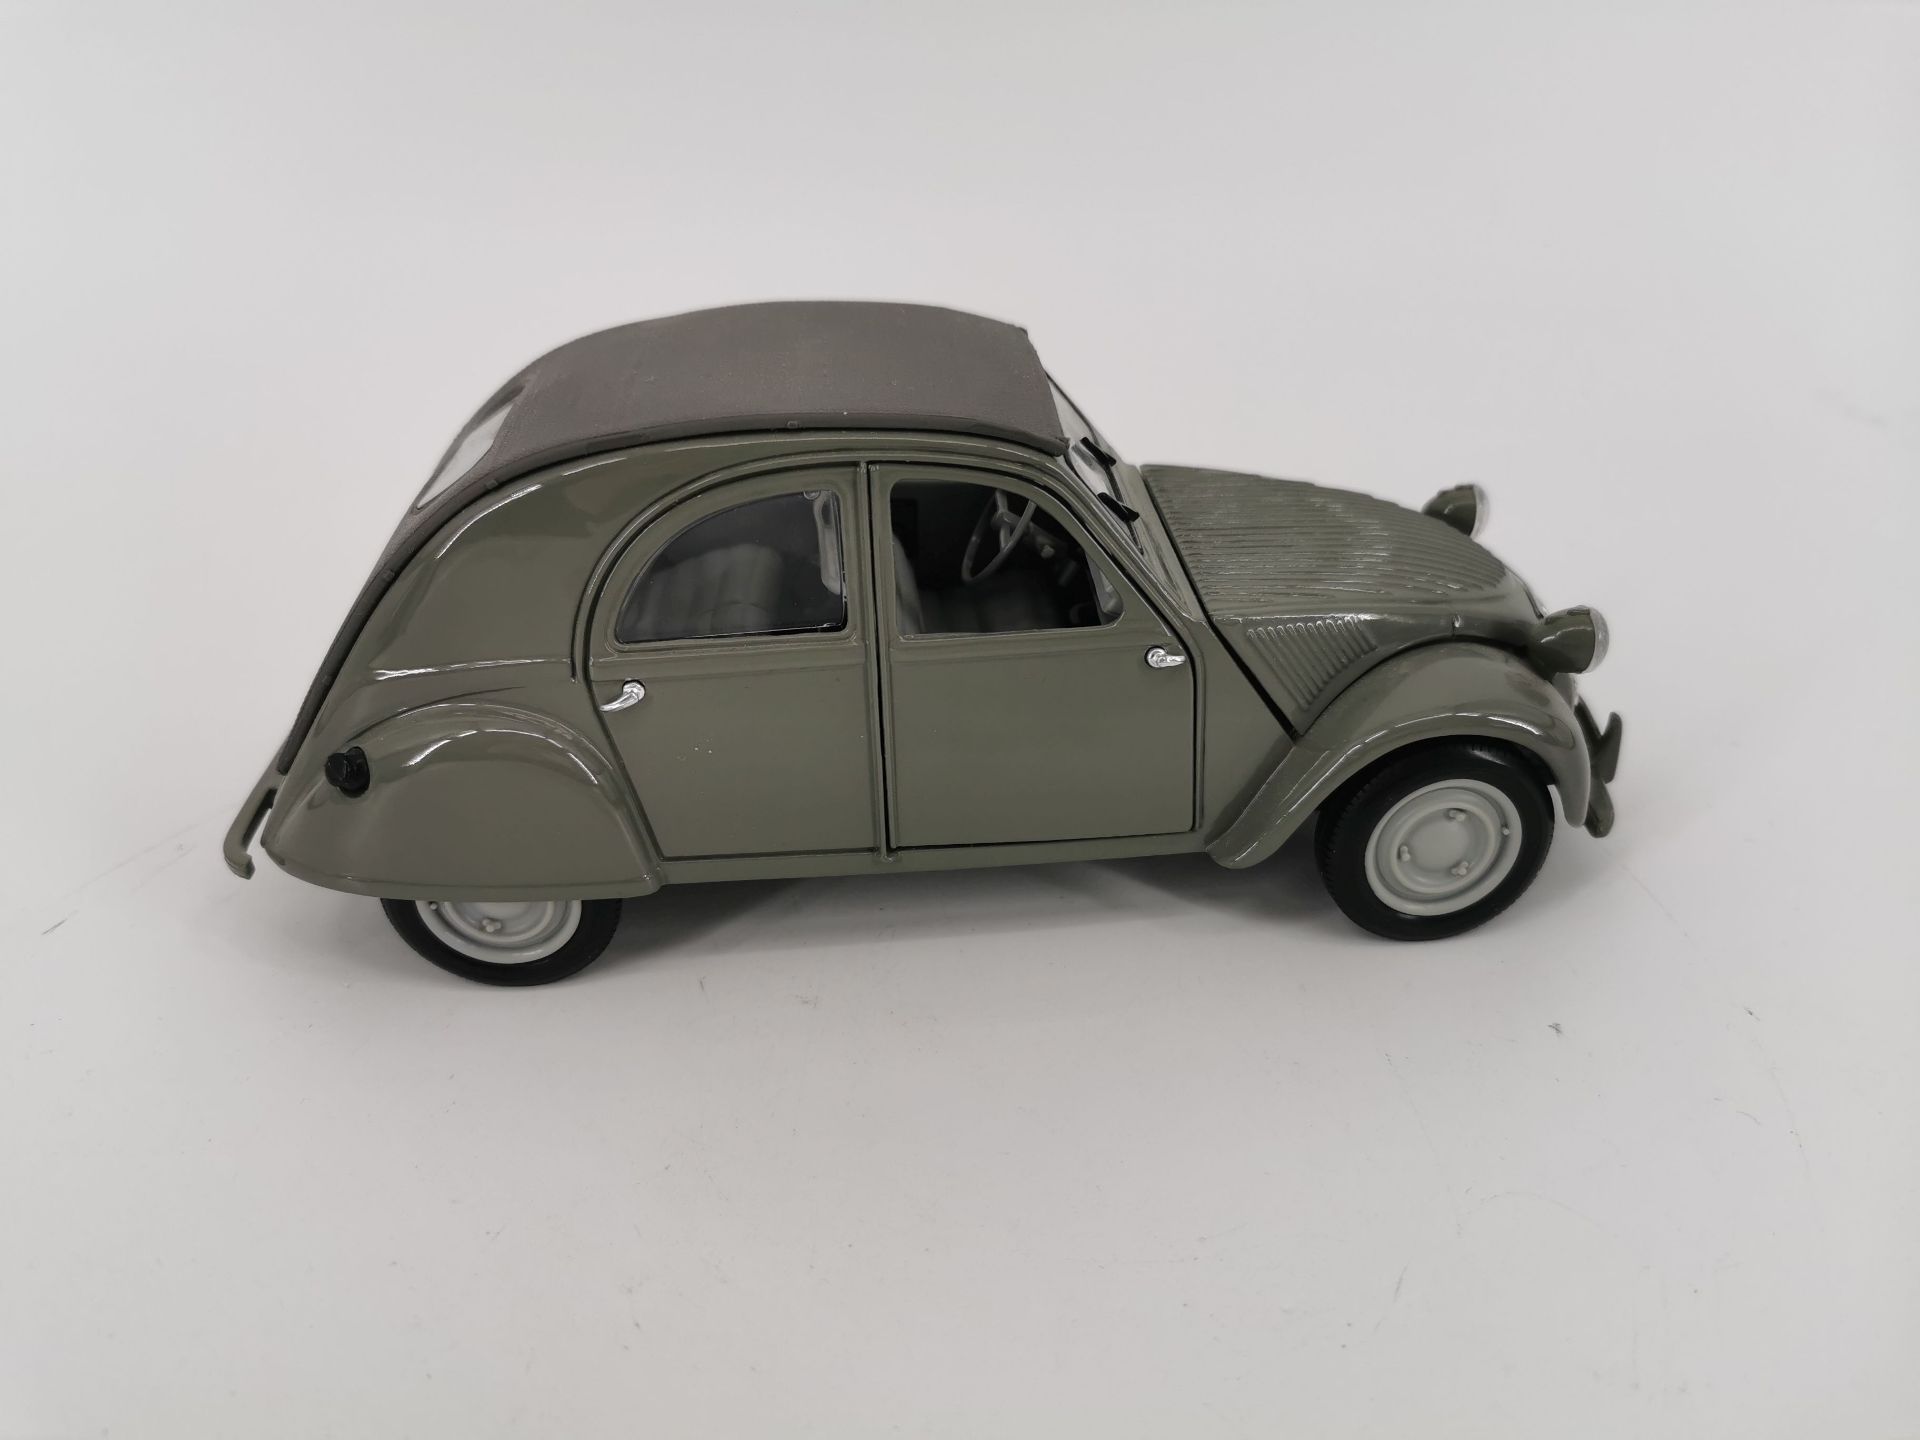 MODEL CAR - Image 3 of 4